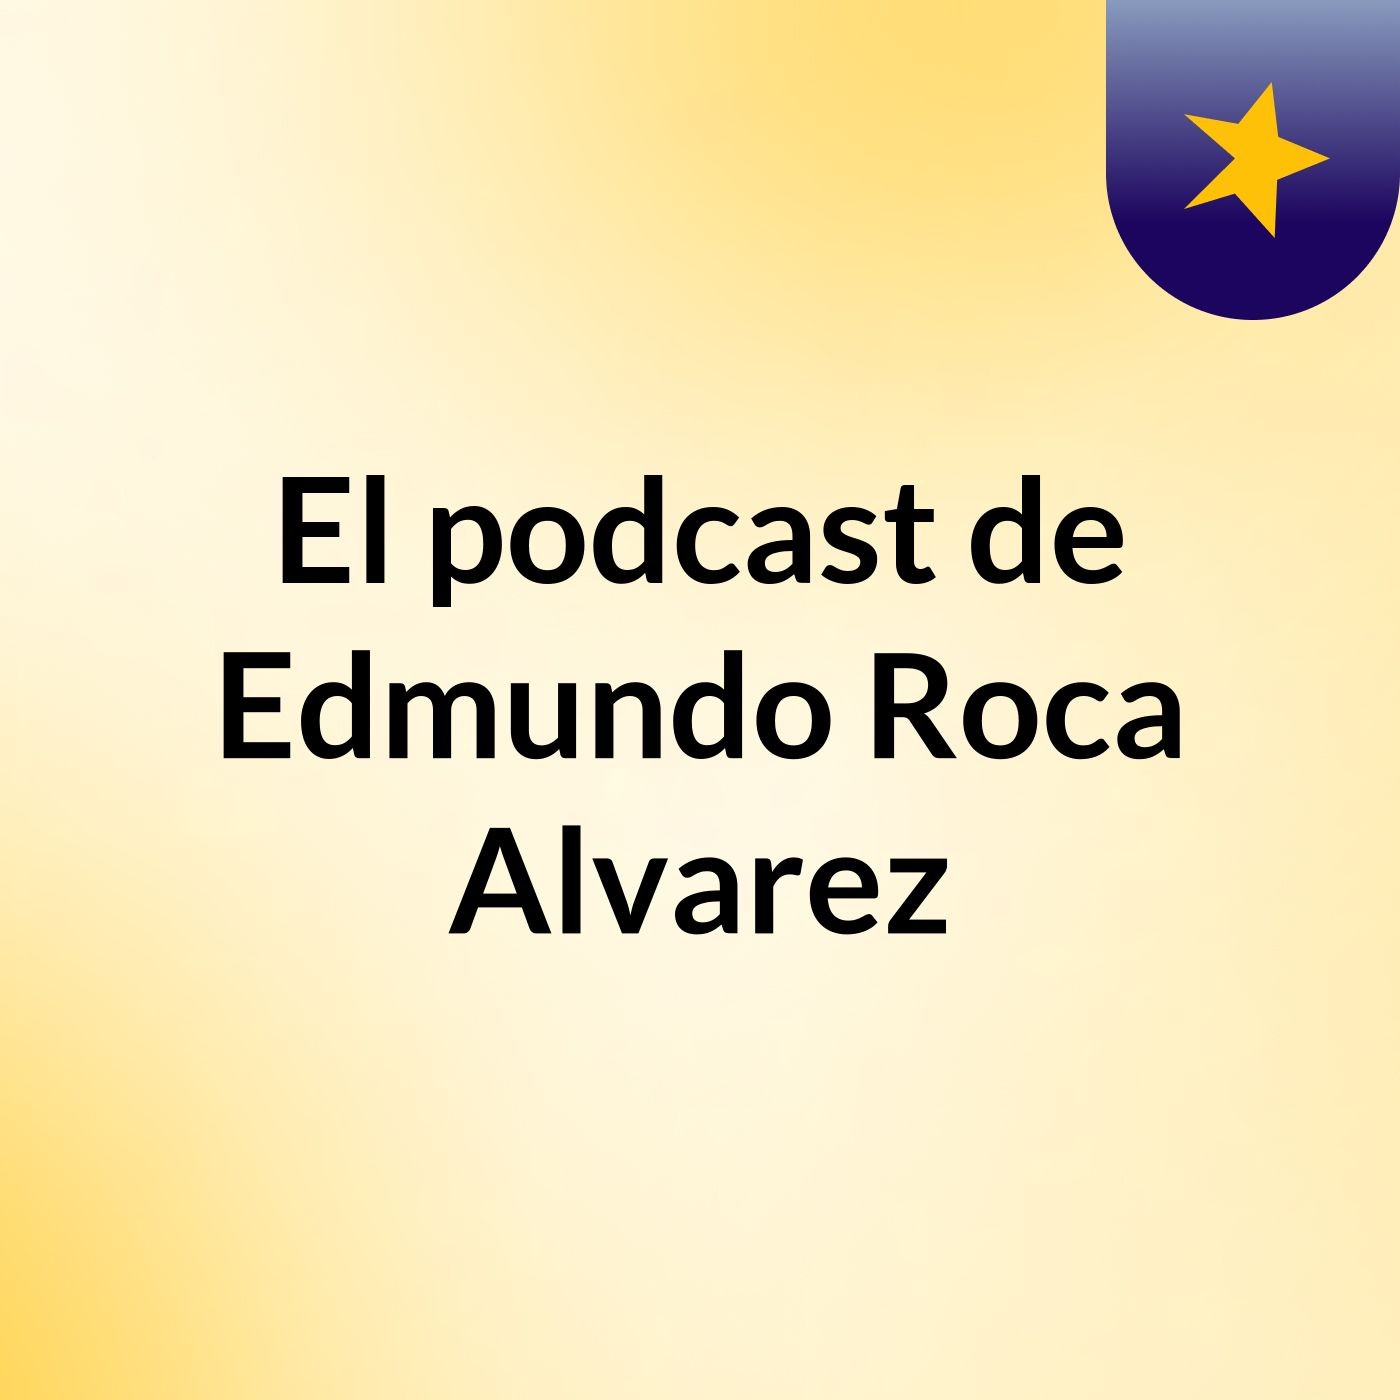 El podcast de Edmundo Roca Alvarez